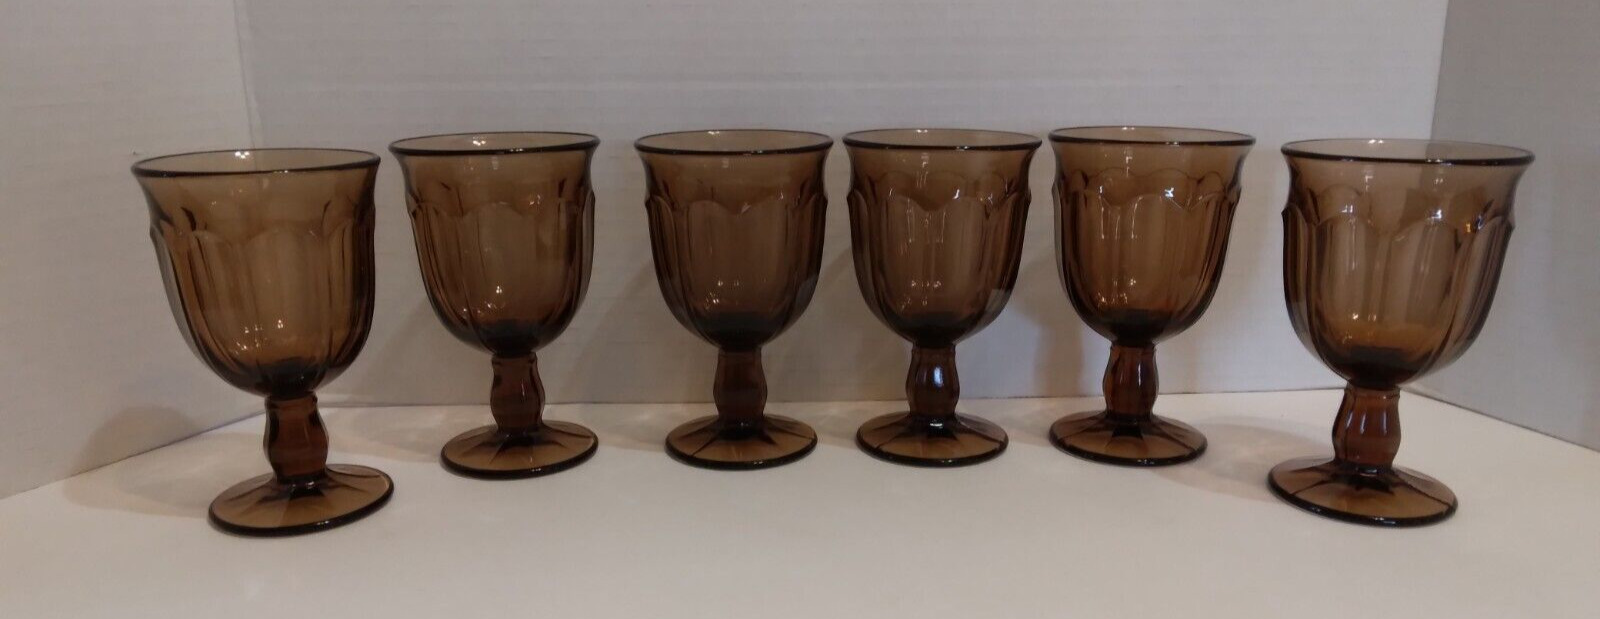 Vintage Imperial Glass Old Williamsburg Nut Brown Footed Goblets Set of 6